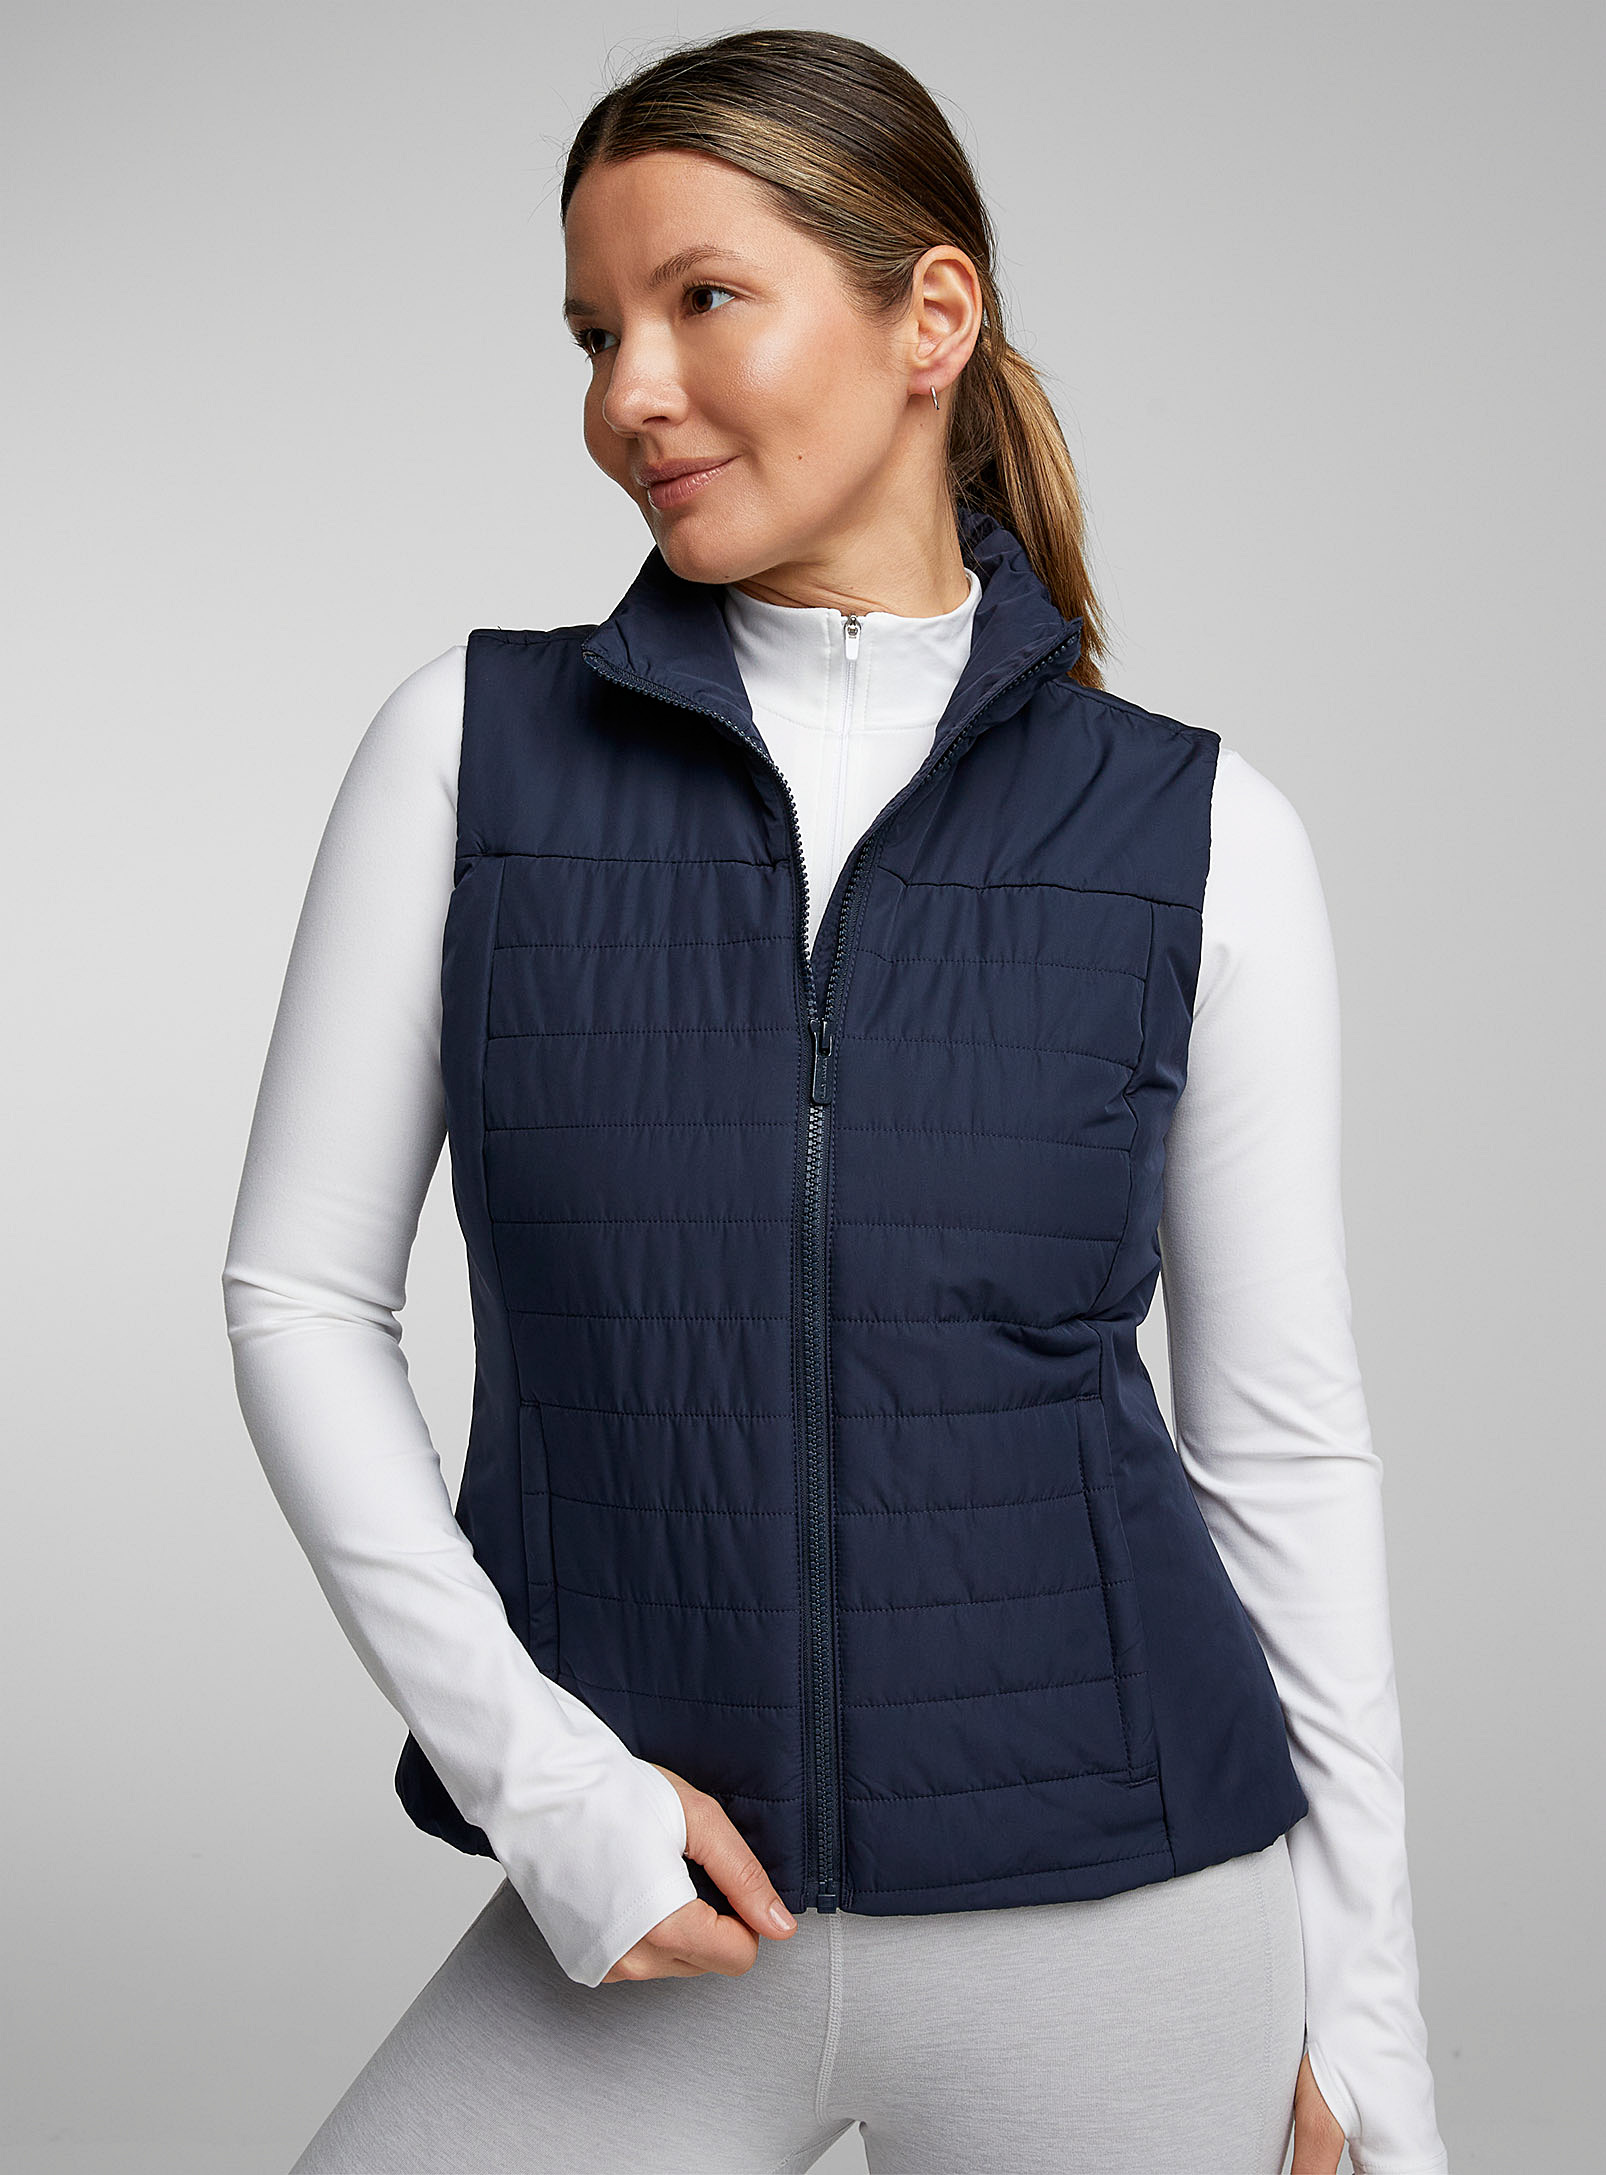 Helly Hansen - Women's Insulator quilted sleeveless jacket